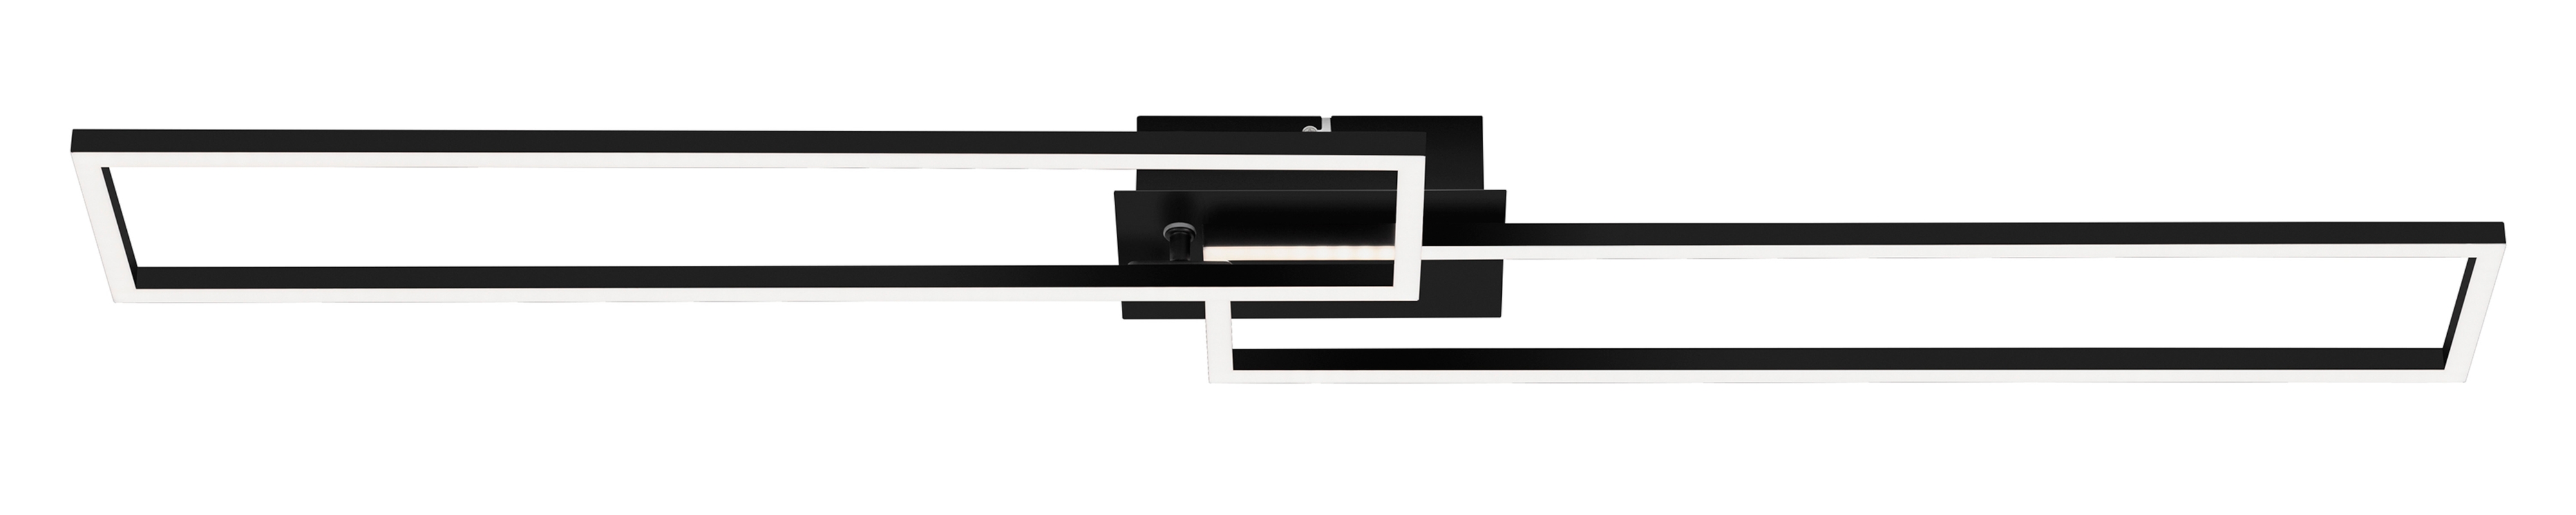 Plafoniera moderno Frames nero24.8x110 cm, - 1